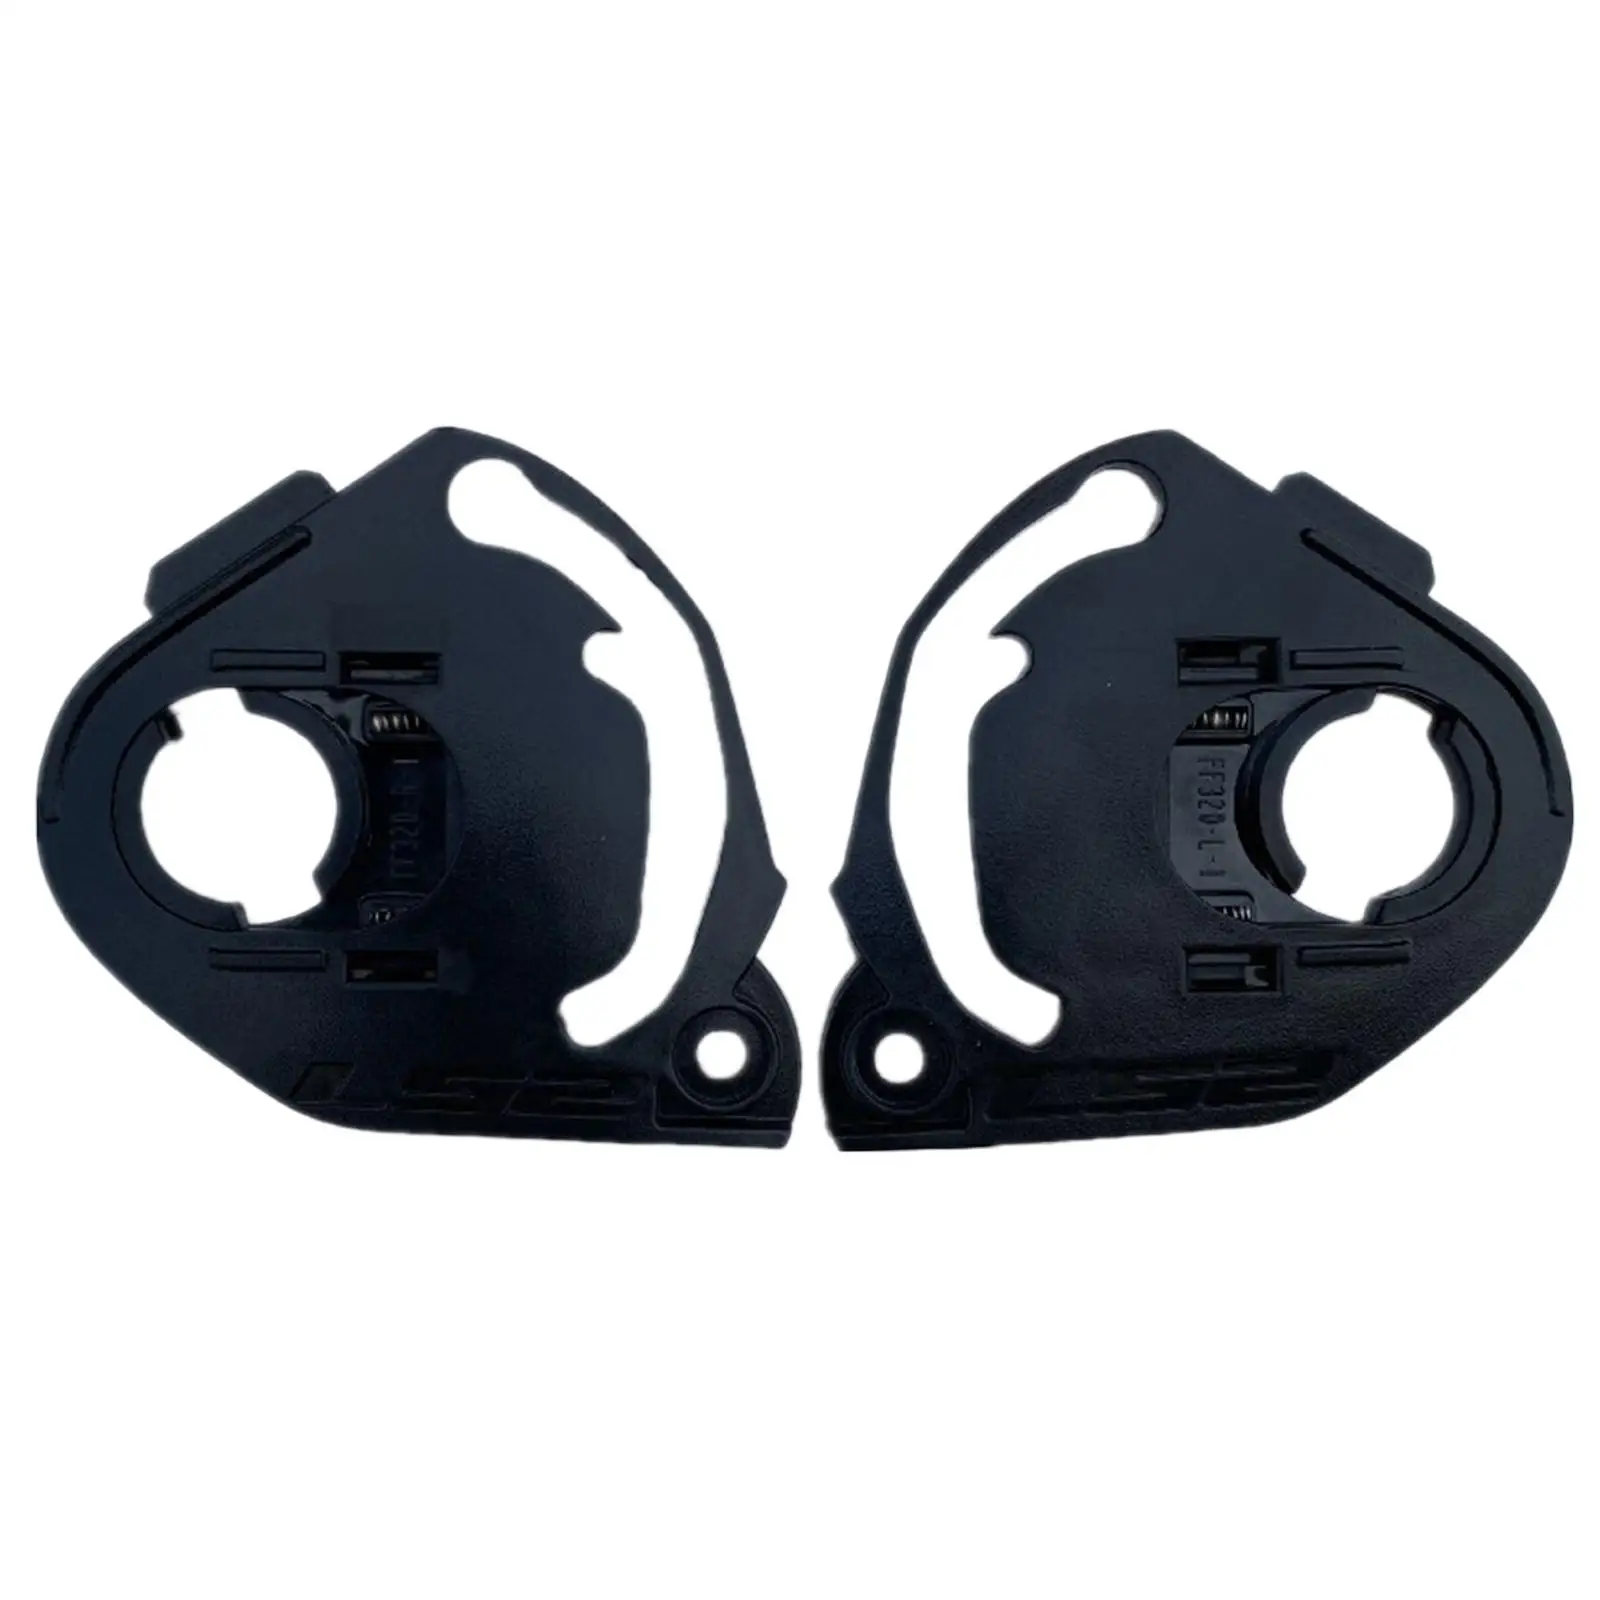 2Pcs Motorcycle Helmet Lens Base Replace Helmets Visor Mounts for Ff320